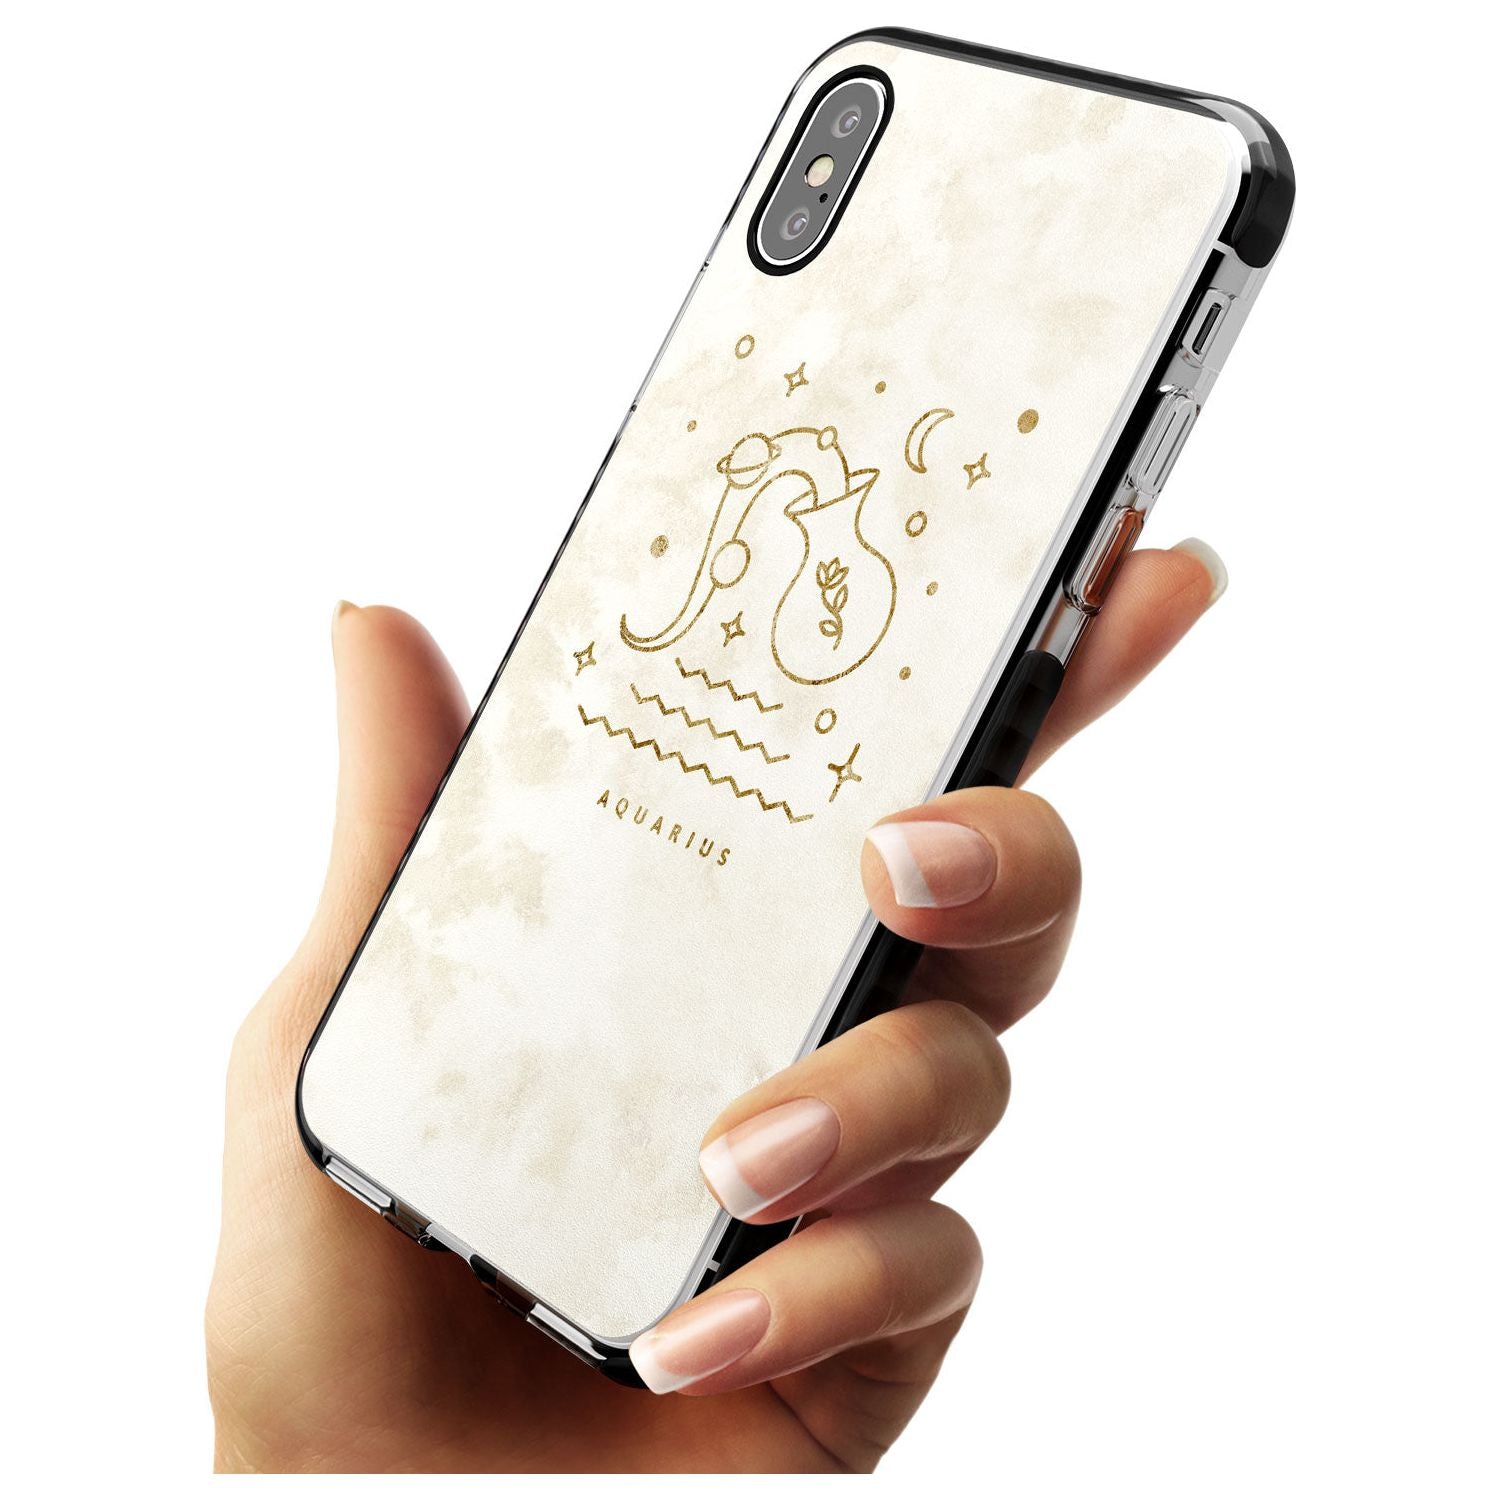 Aquarius Emblem - Solid Gold Marbled Design Black Impact Phone Case for iPhone X XS Max XR